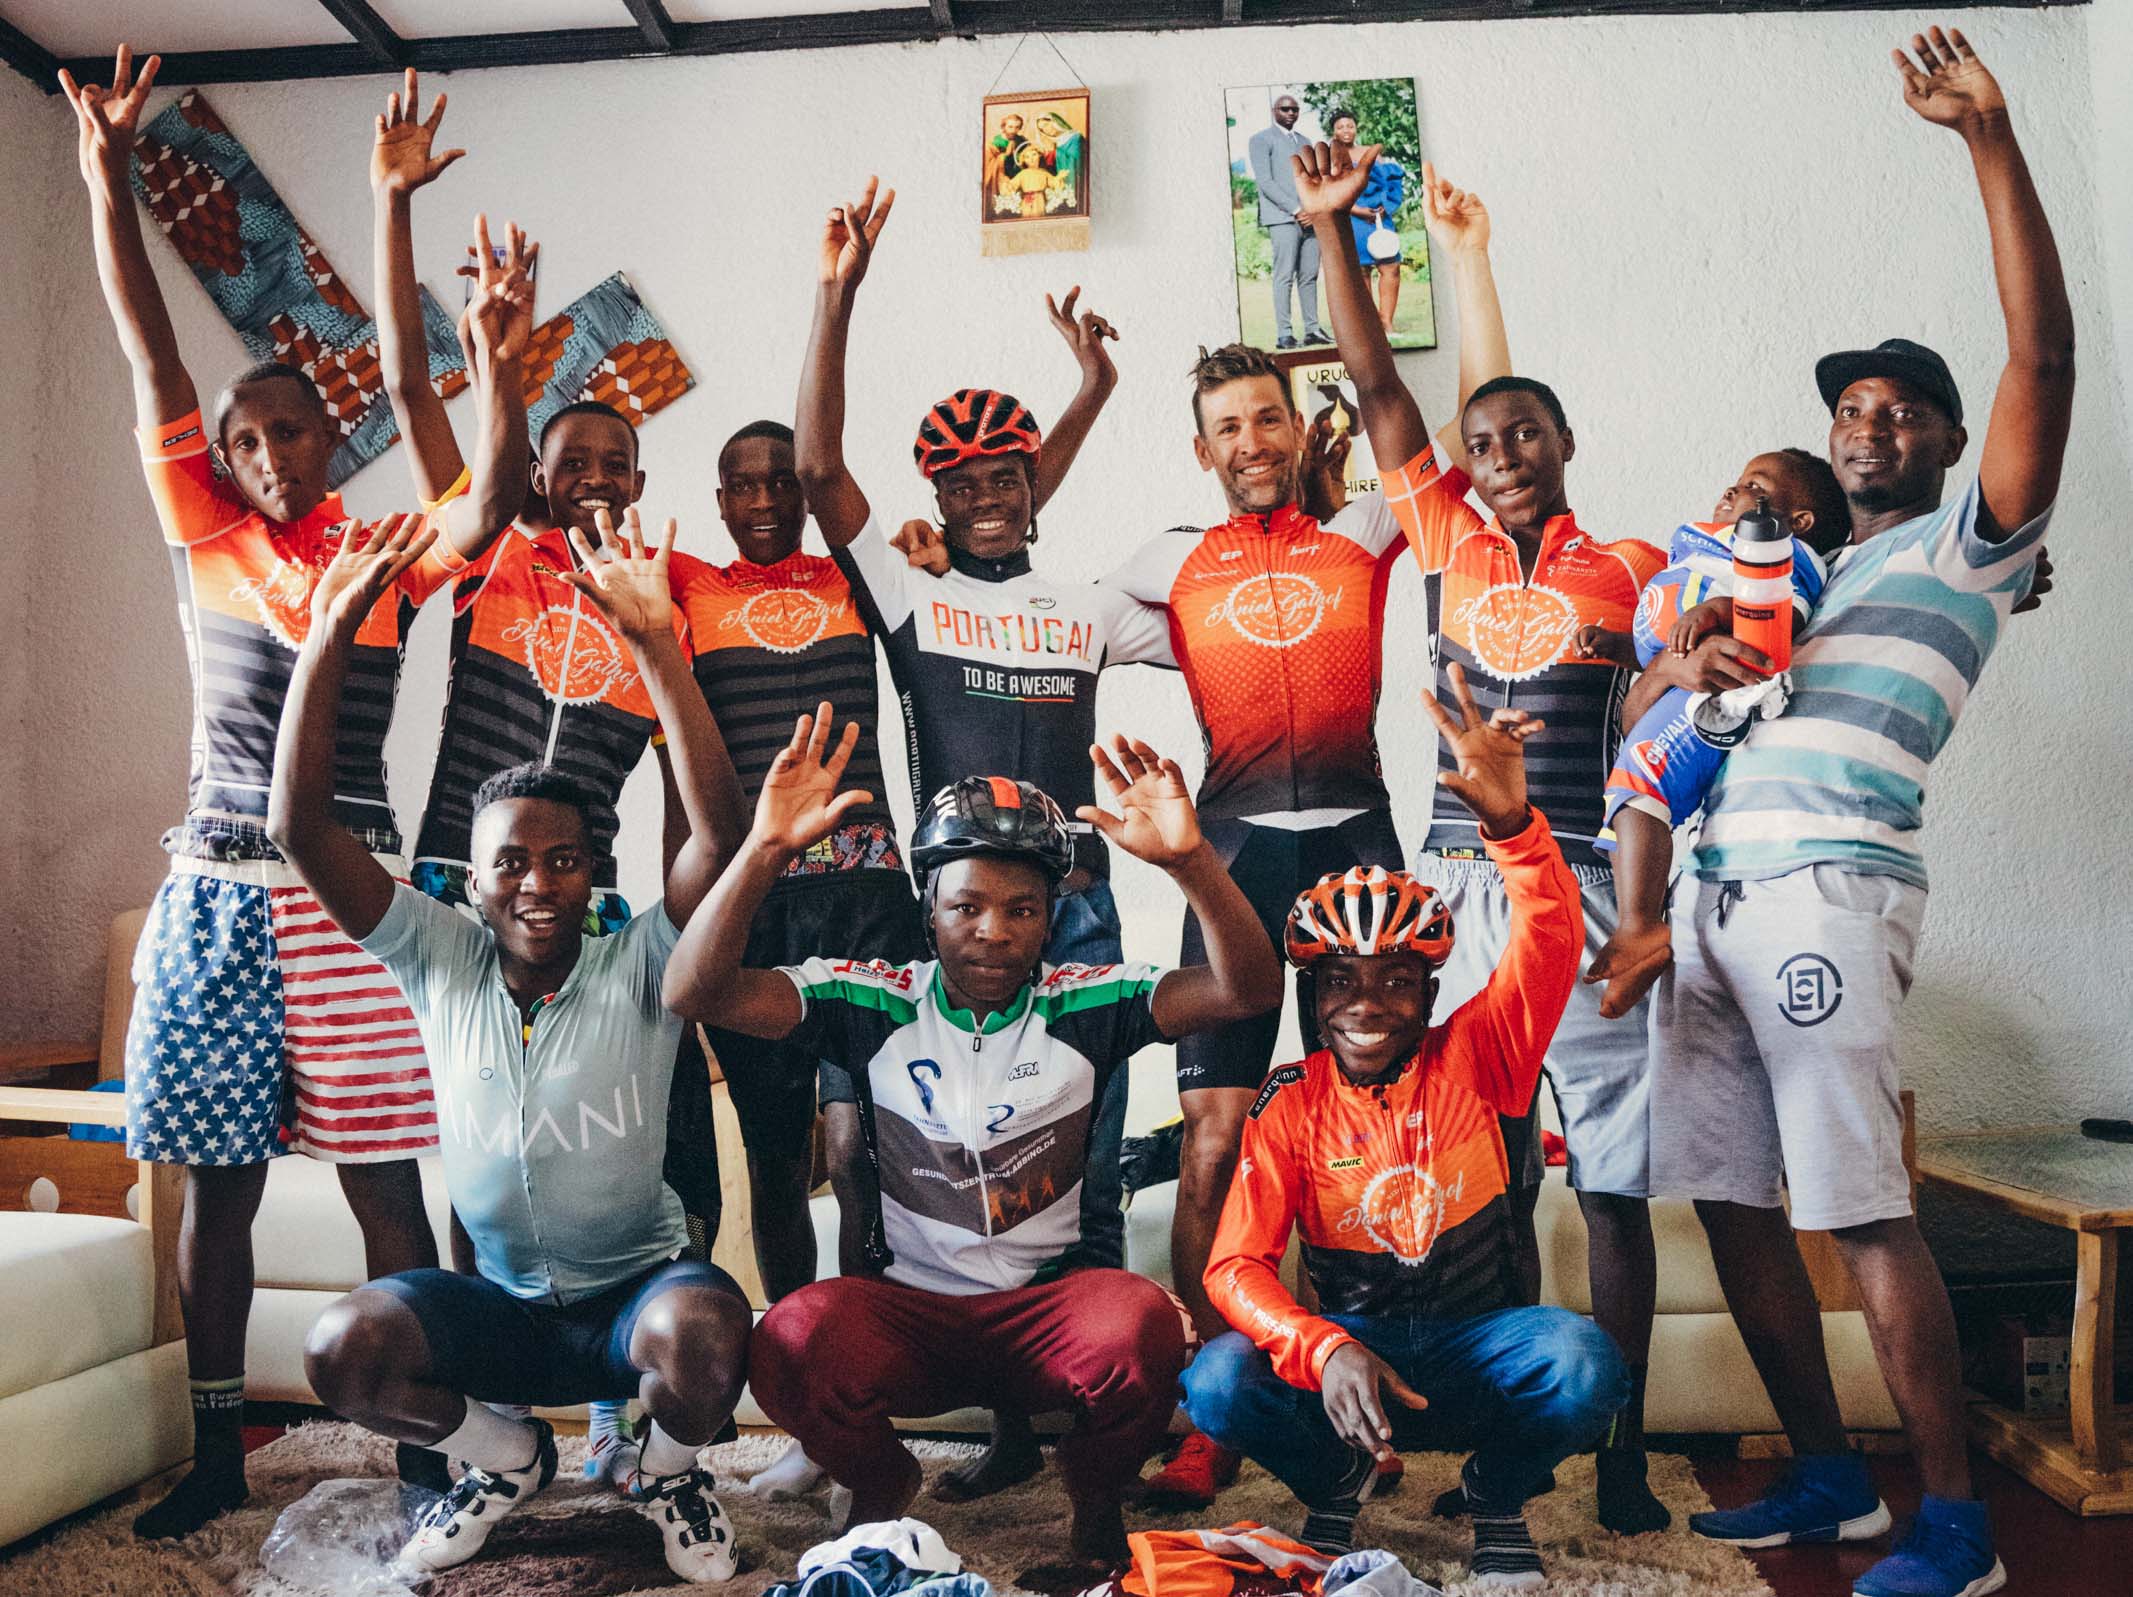 Daniel Gathof sportlich unterwegs in Ruanda